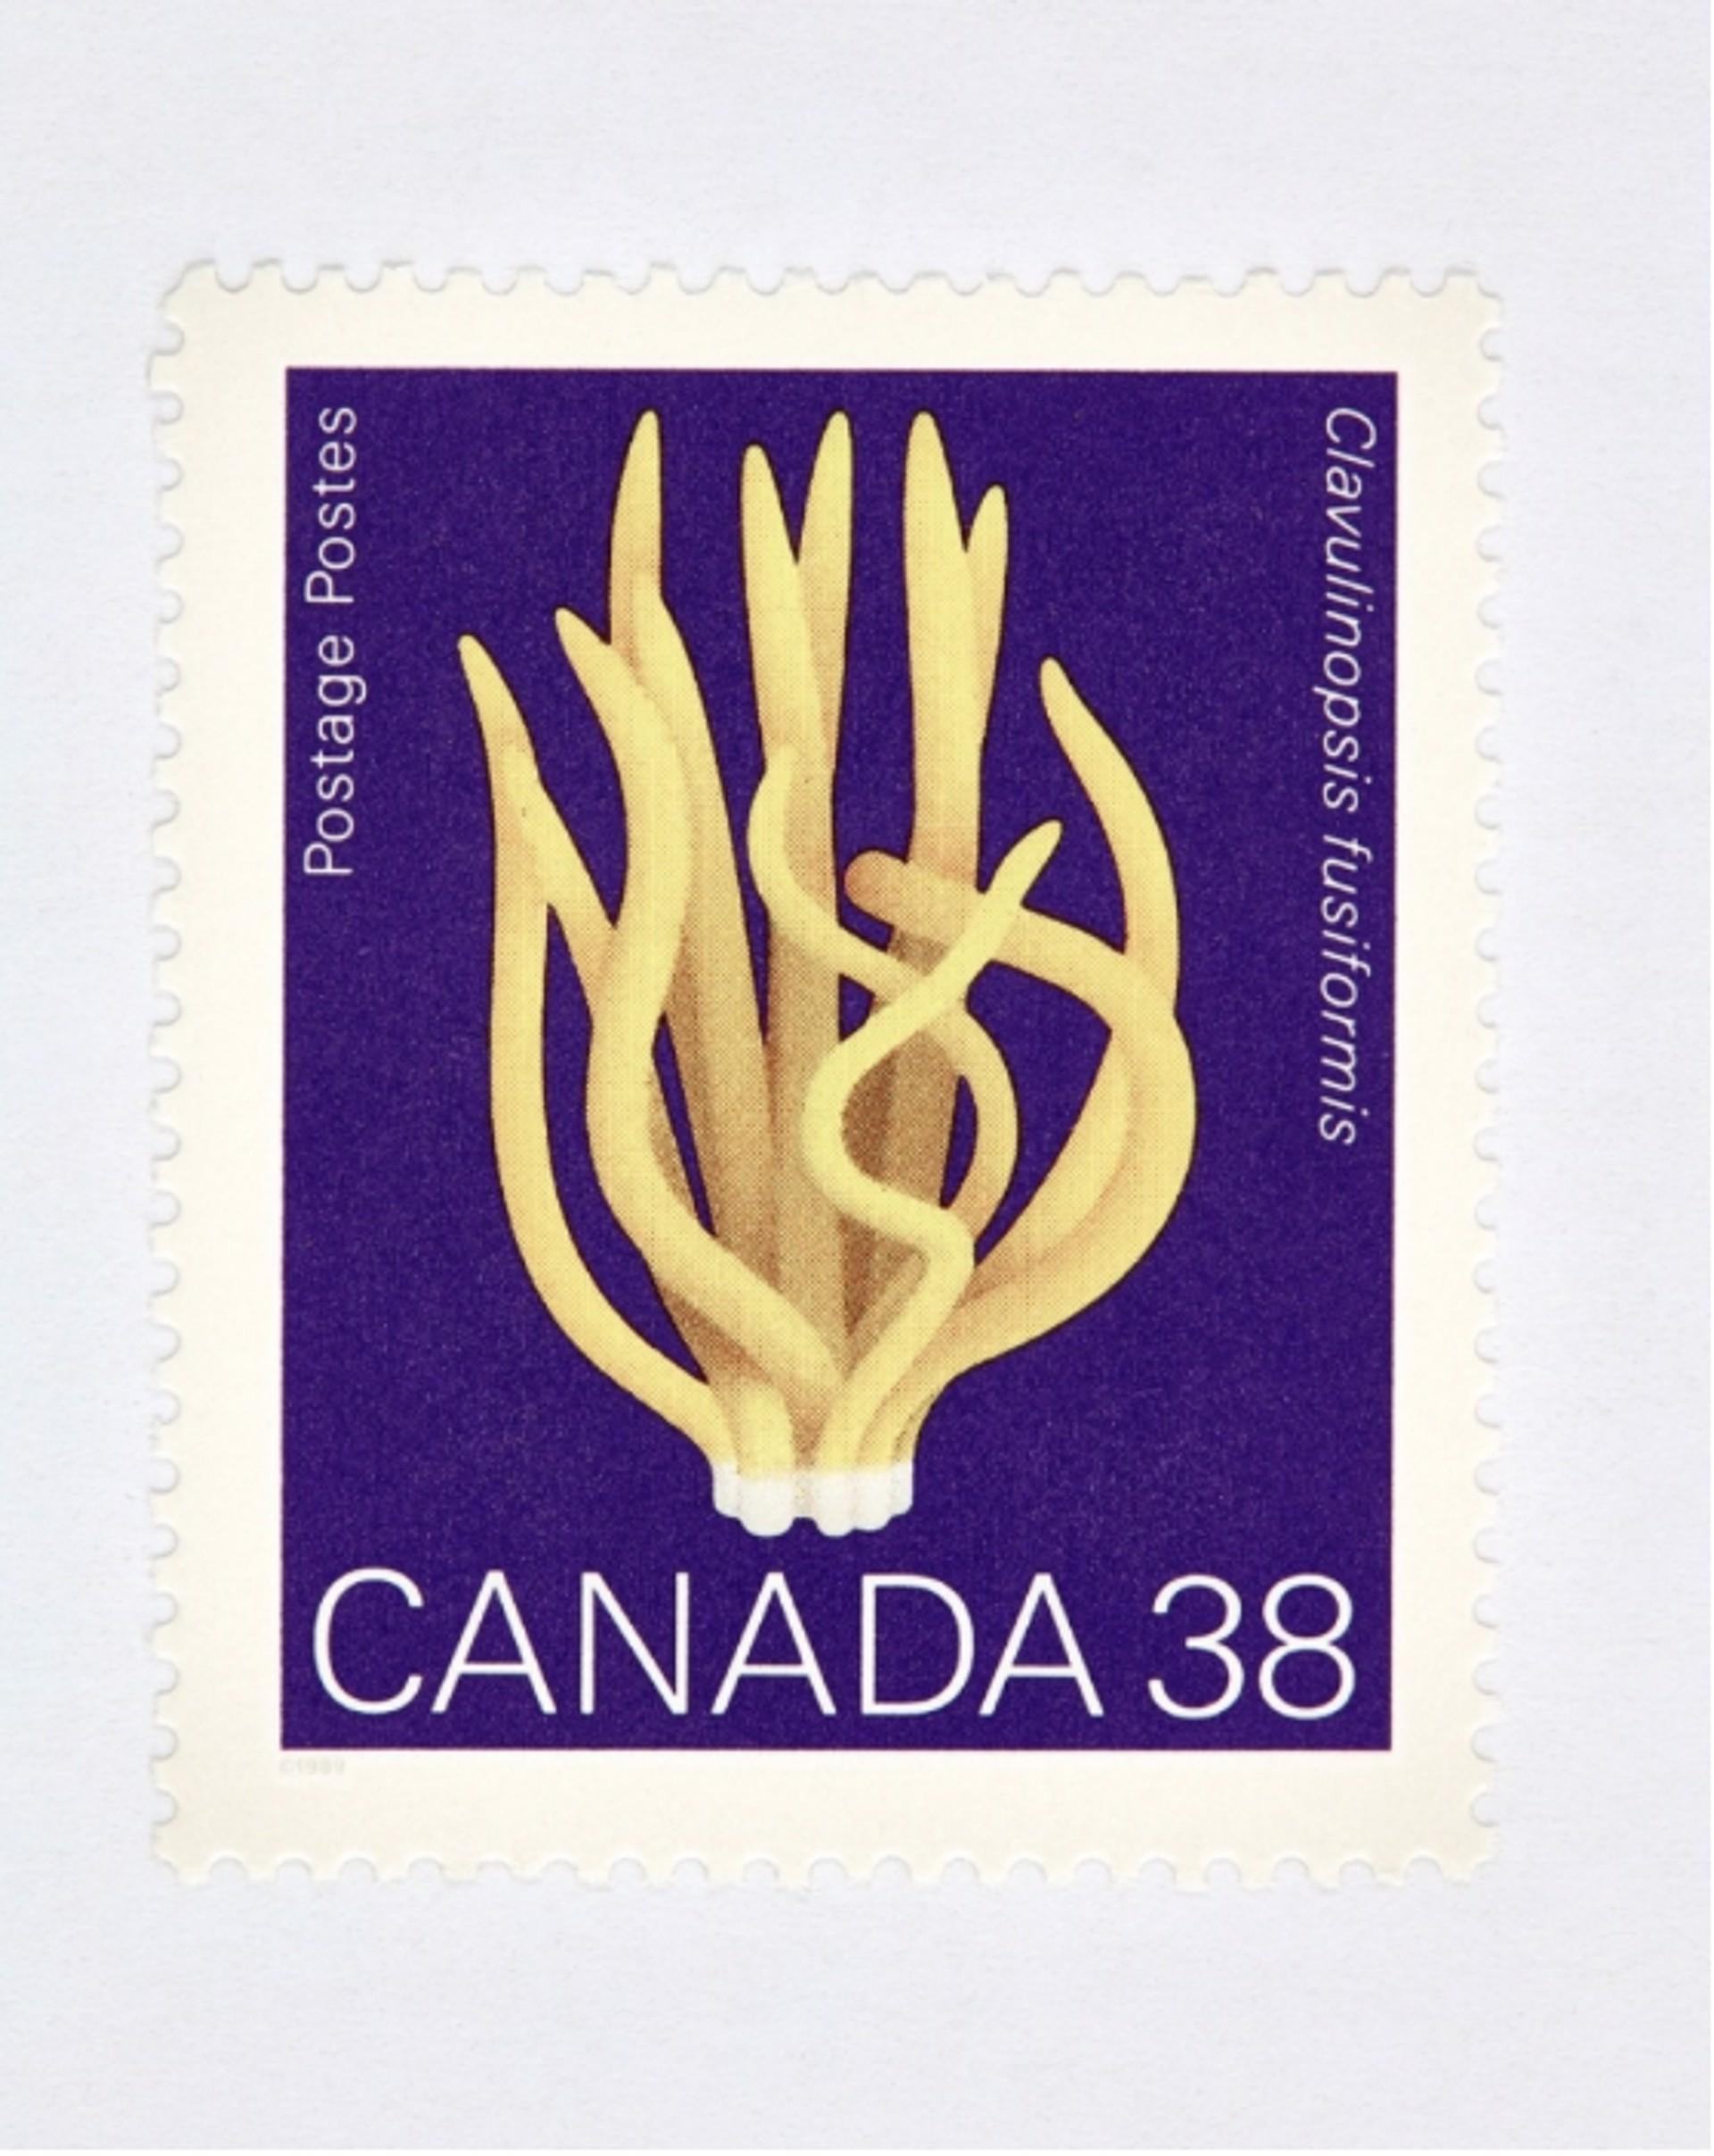 Peter Andrew Lusztyk Color Photograph - Canada 38 Mushroom (Purple) (36" x 27")